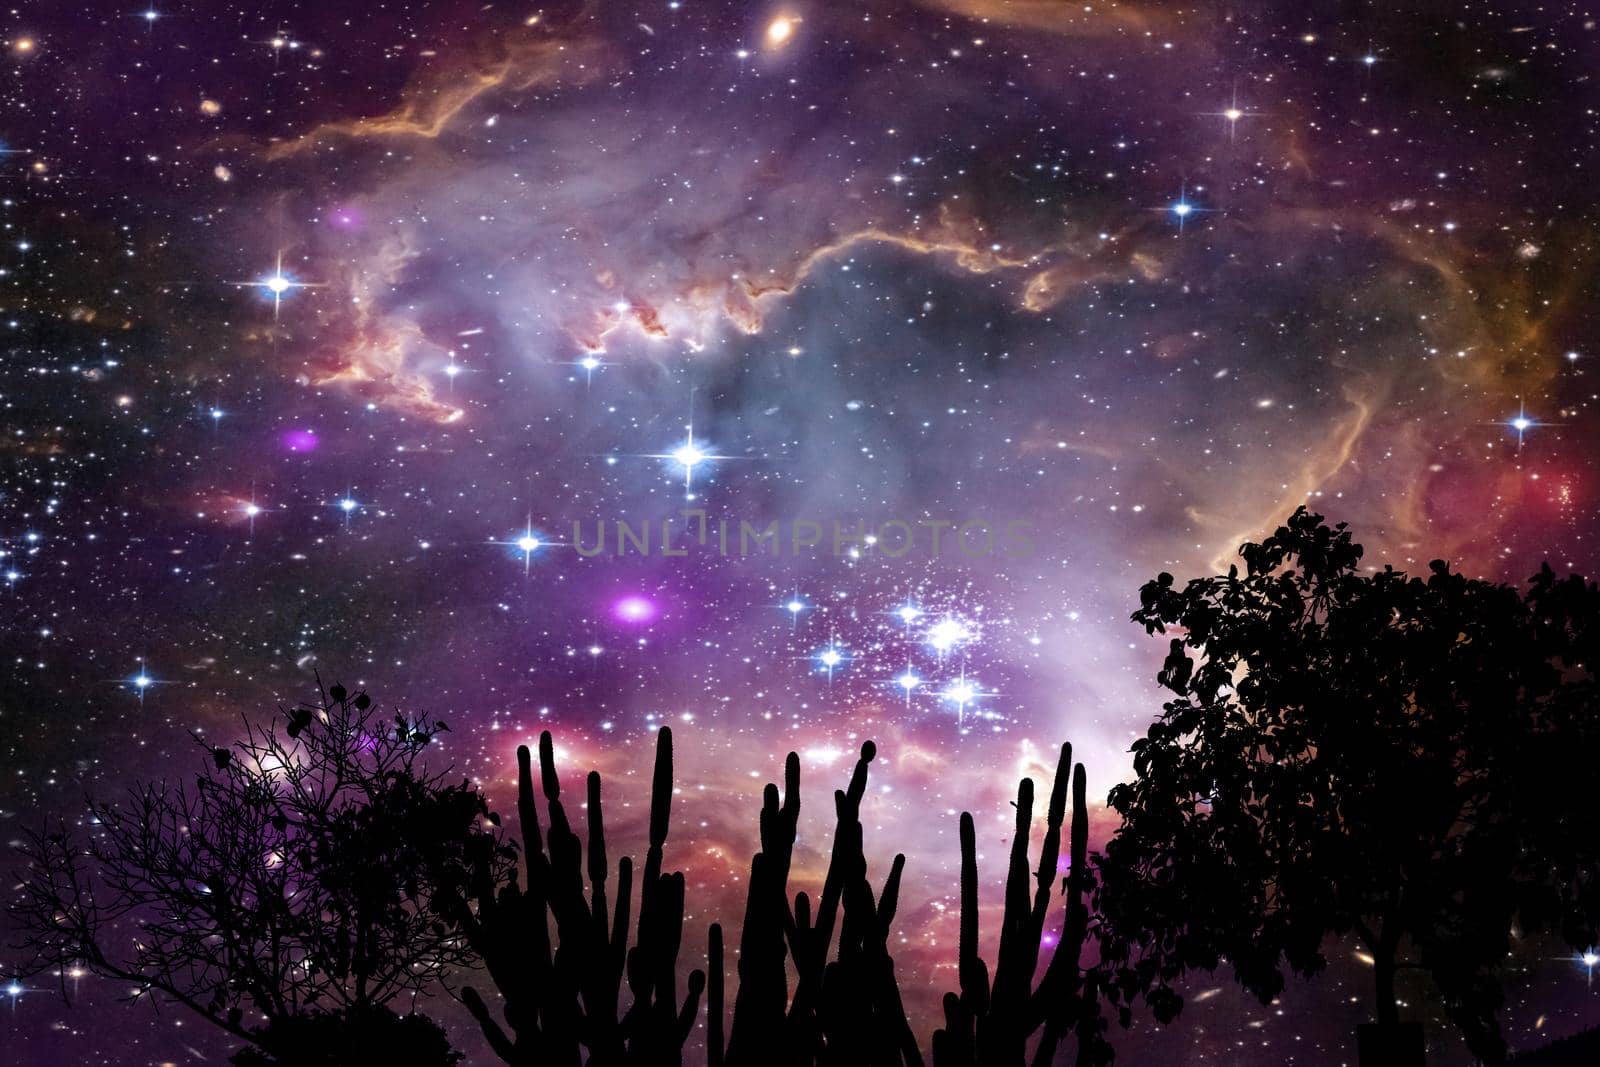 Nebula in galaxy over silhouette tree on the mountain night sky by Darkfox